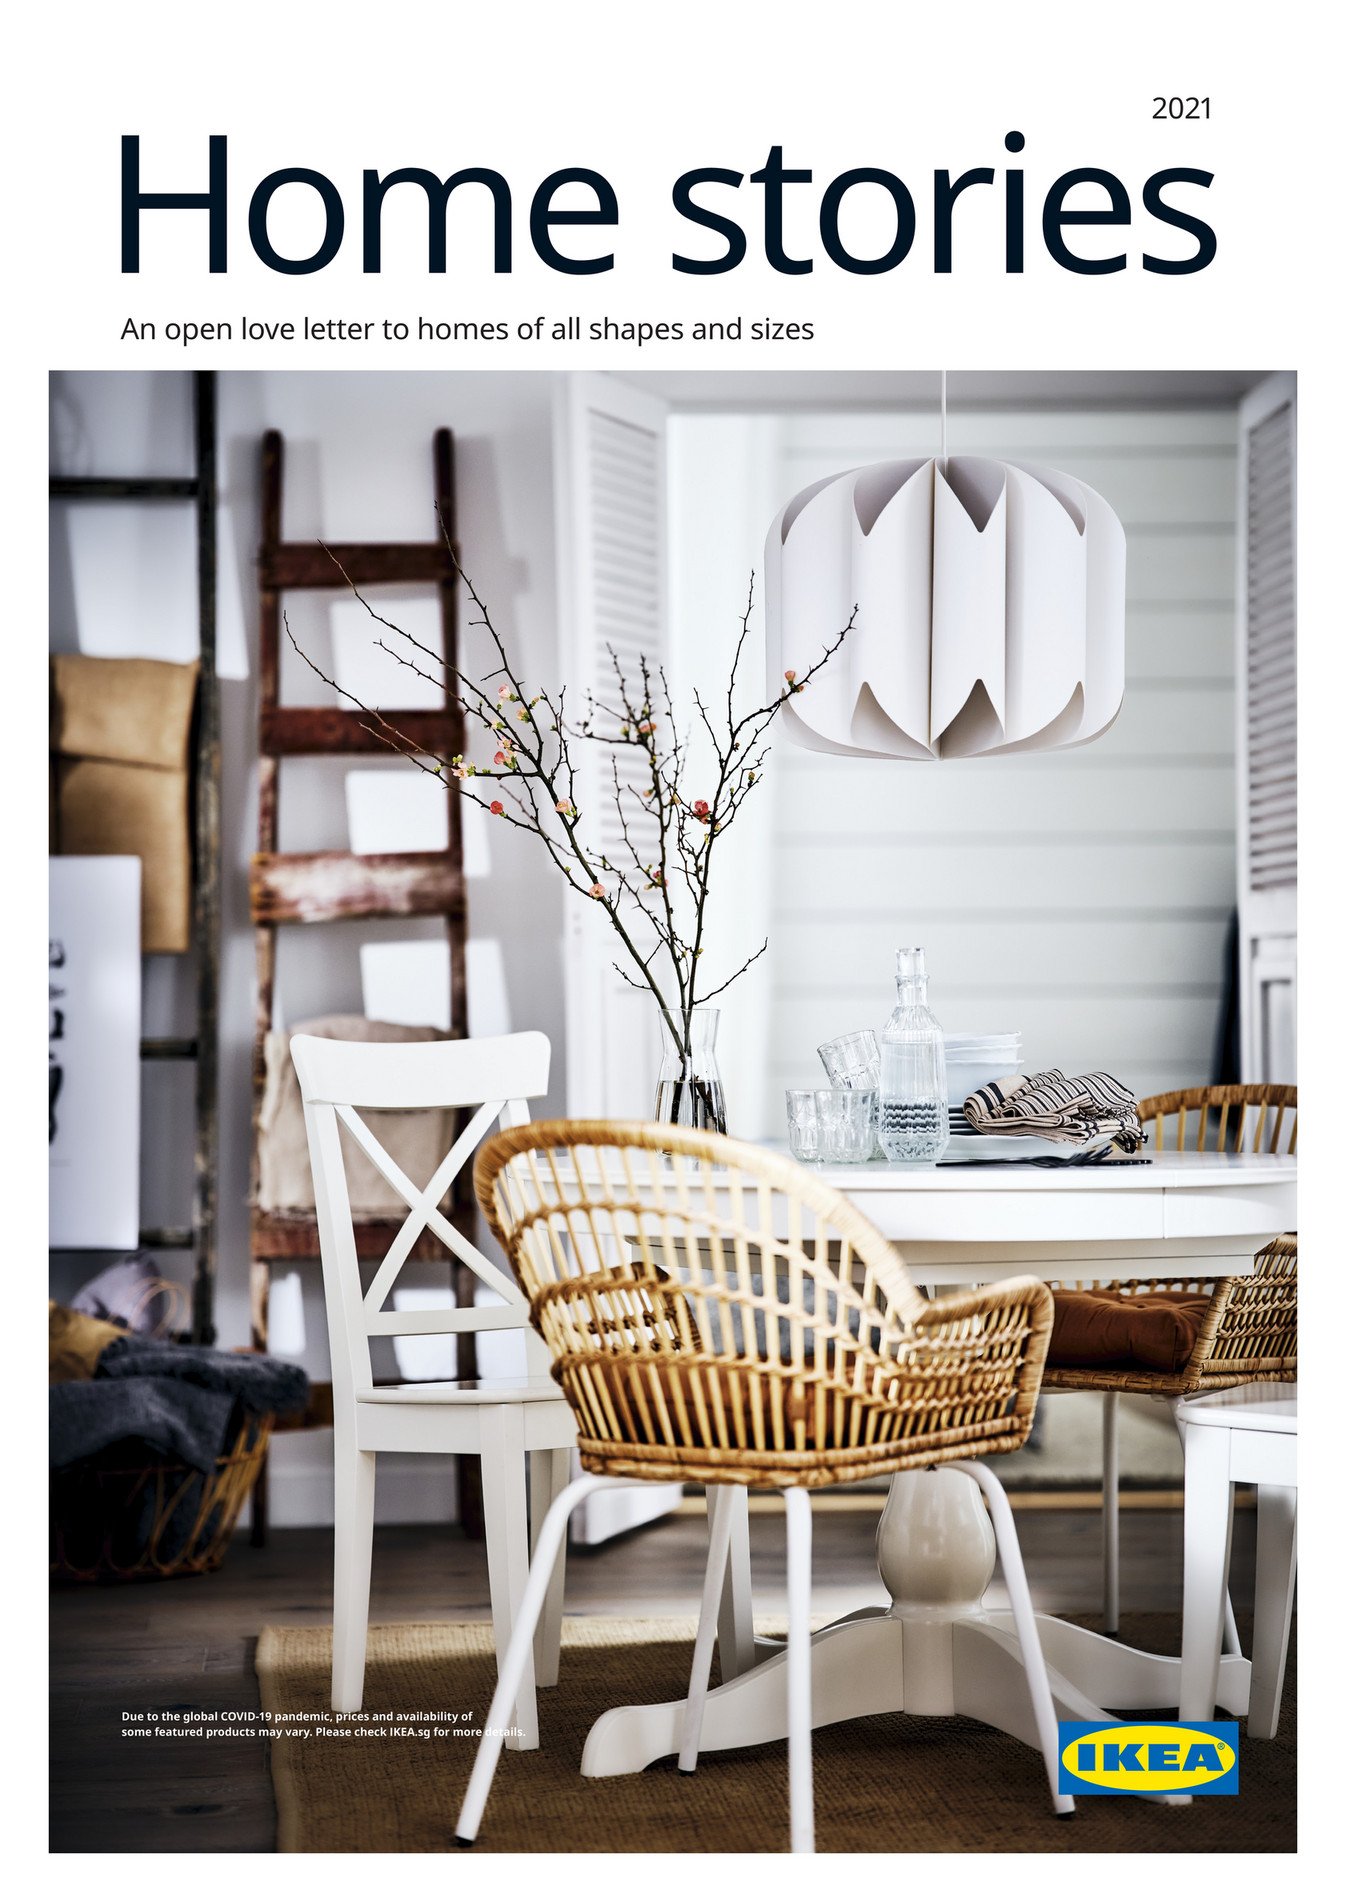 IKEA Singapore (English) - Home stories 2021 - Page 6-7